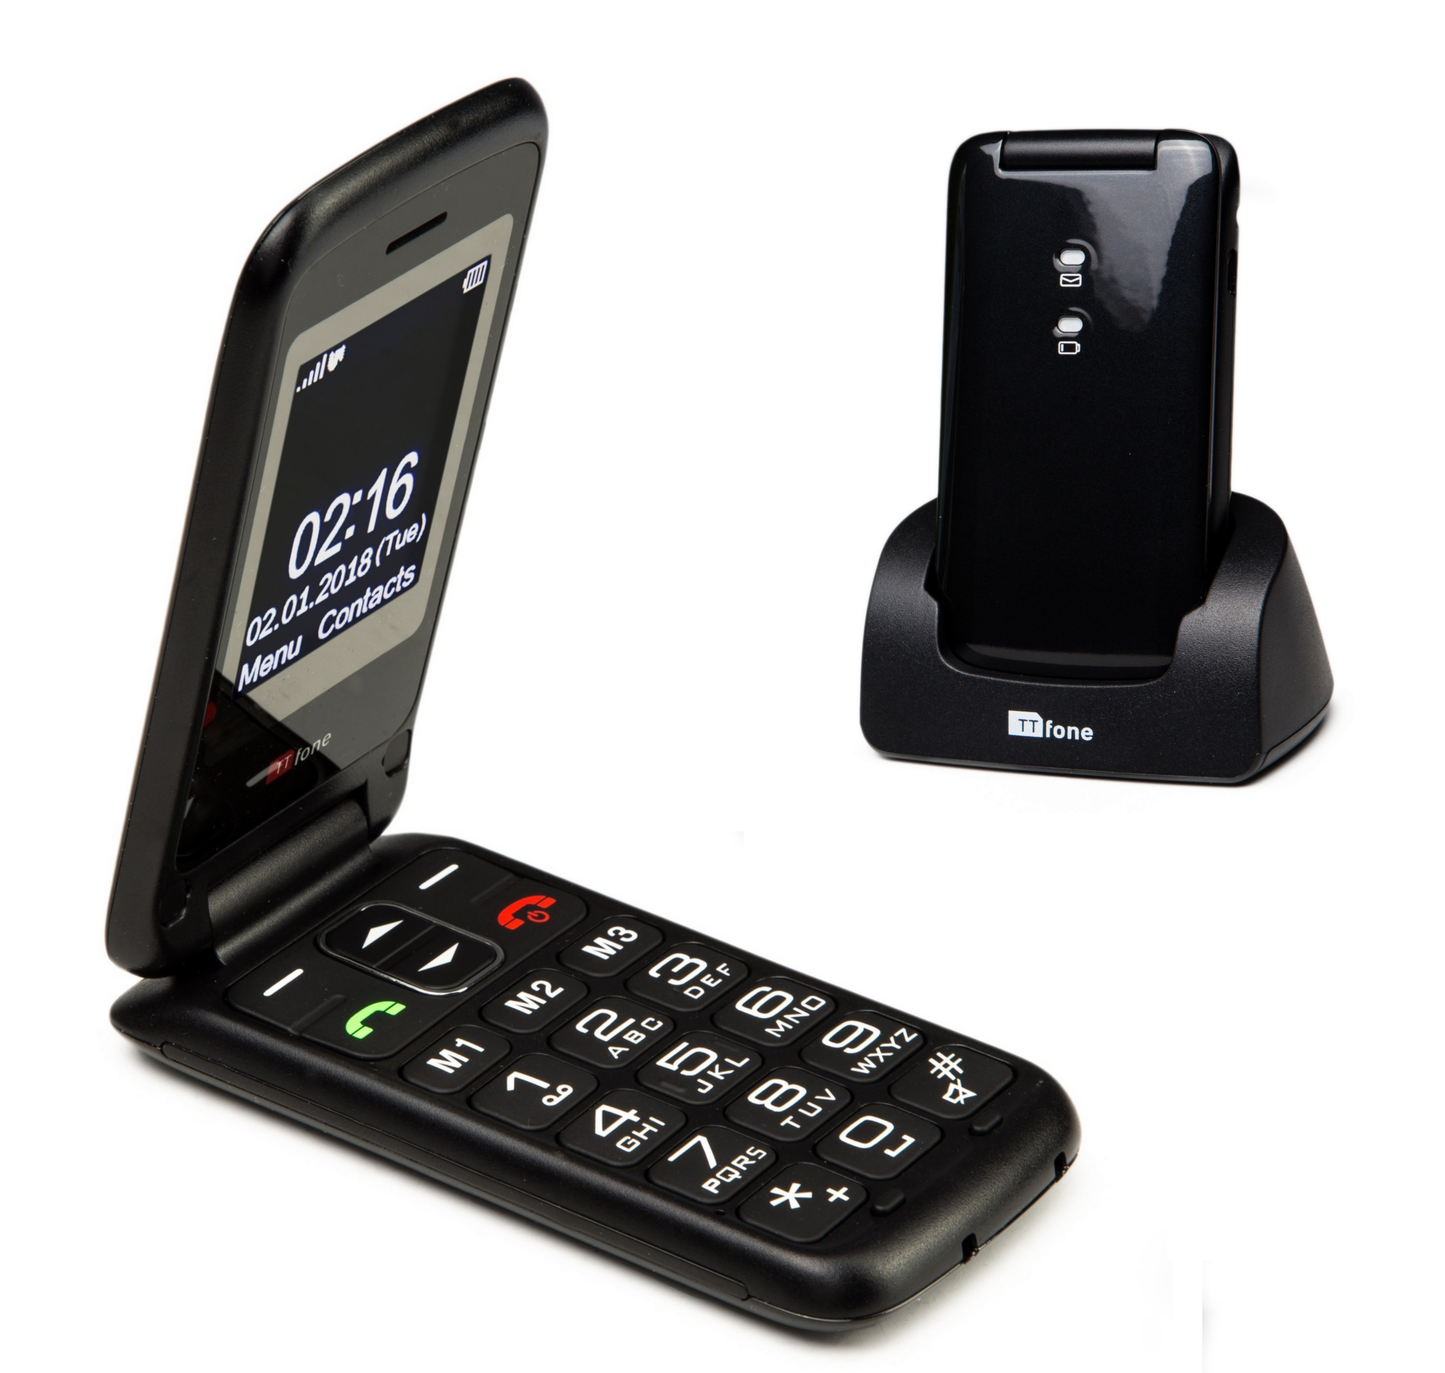 TTfone Nova TT650 No Dock Charger - Warehouse Deals with O2 Pay As You Go Sim Card